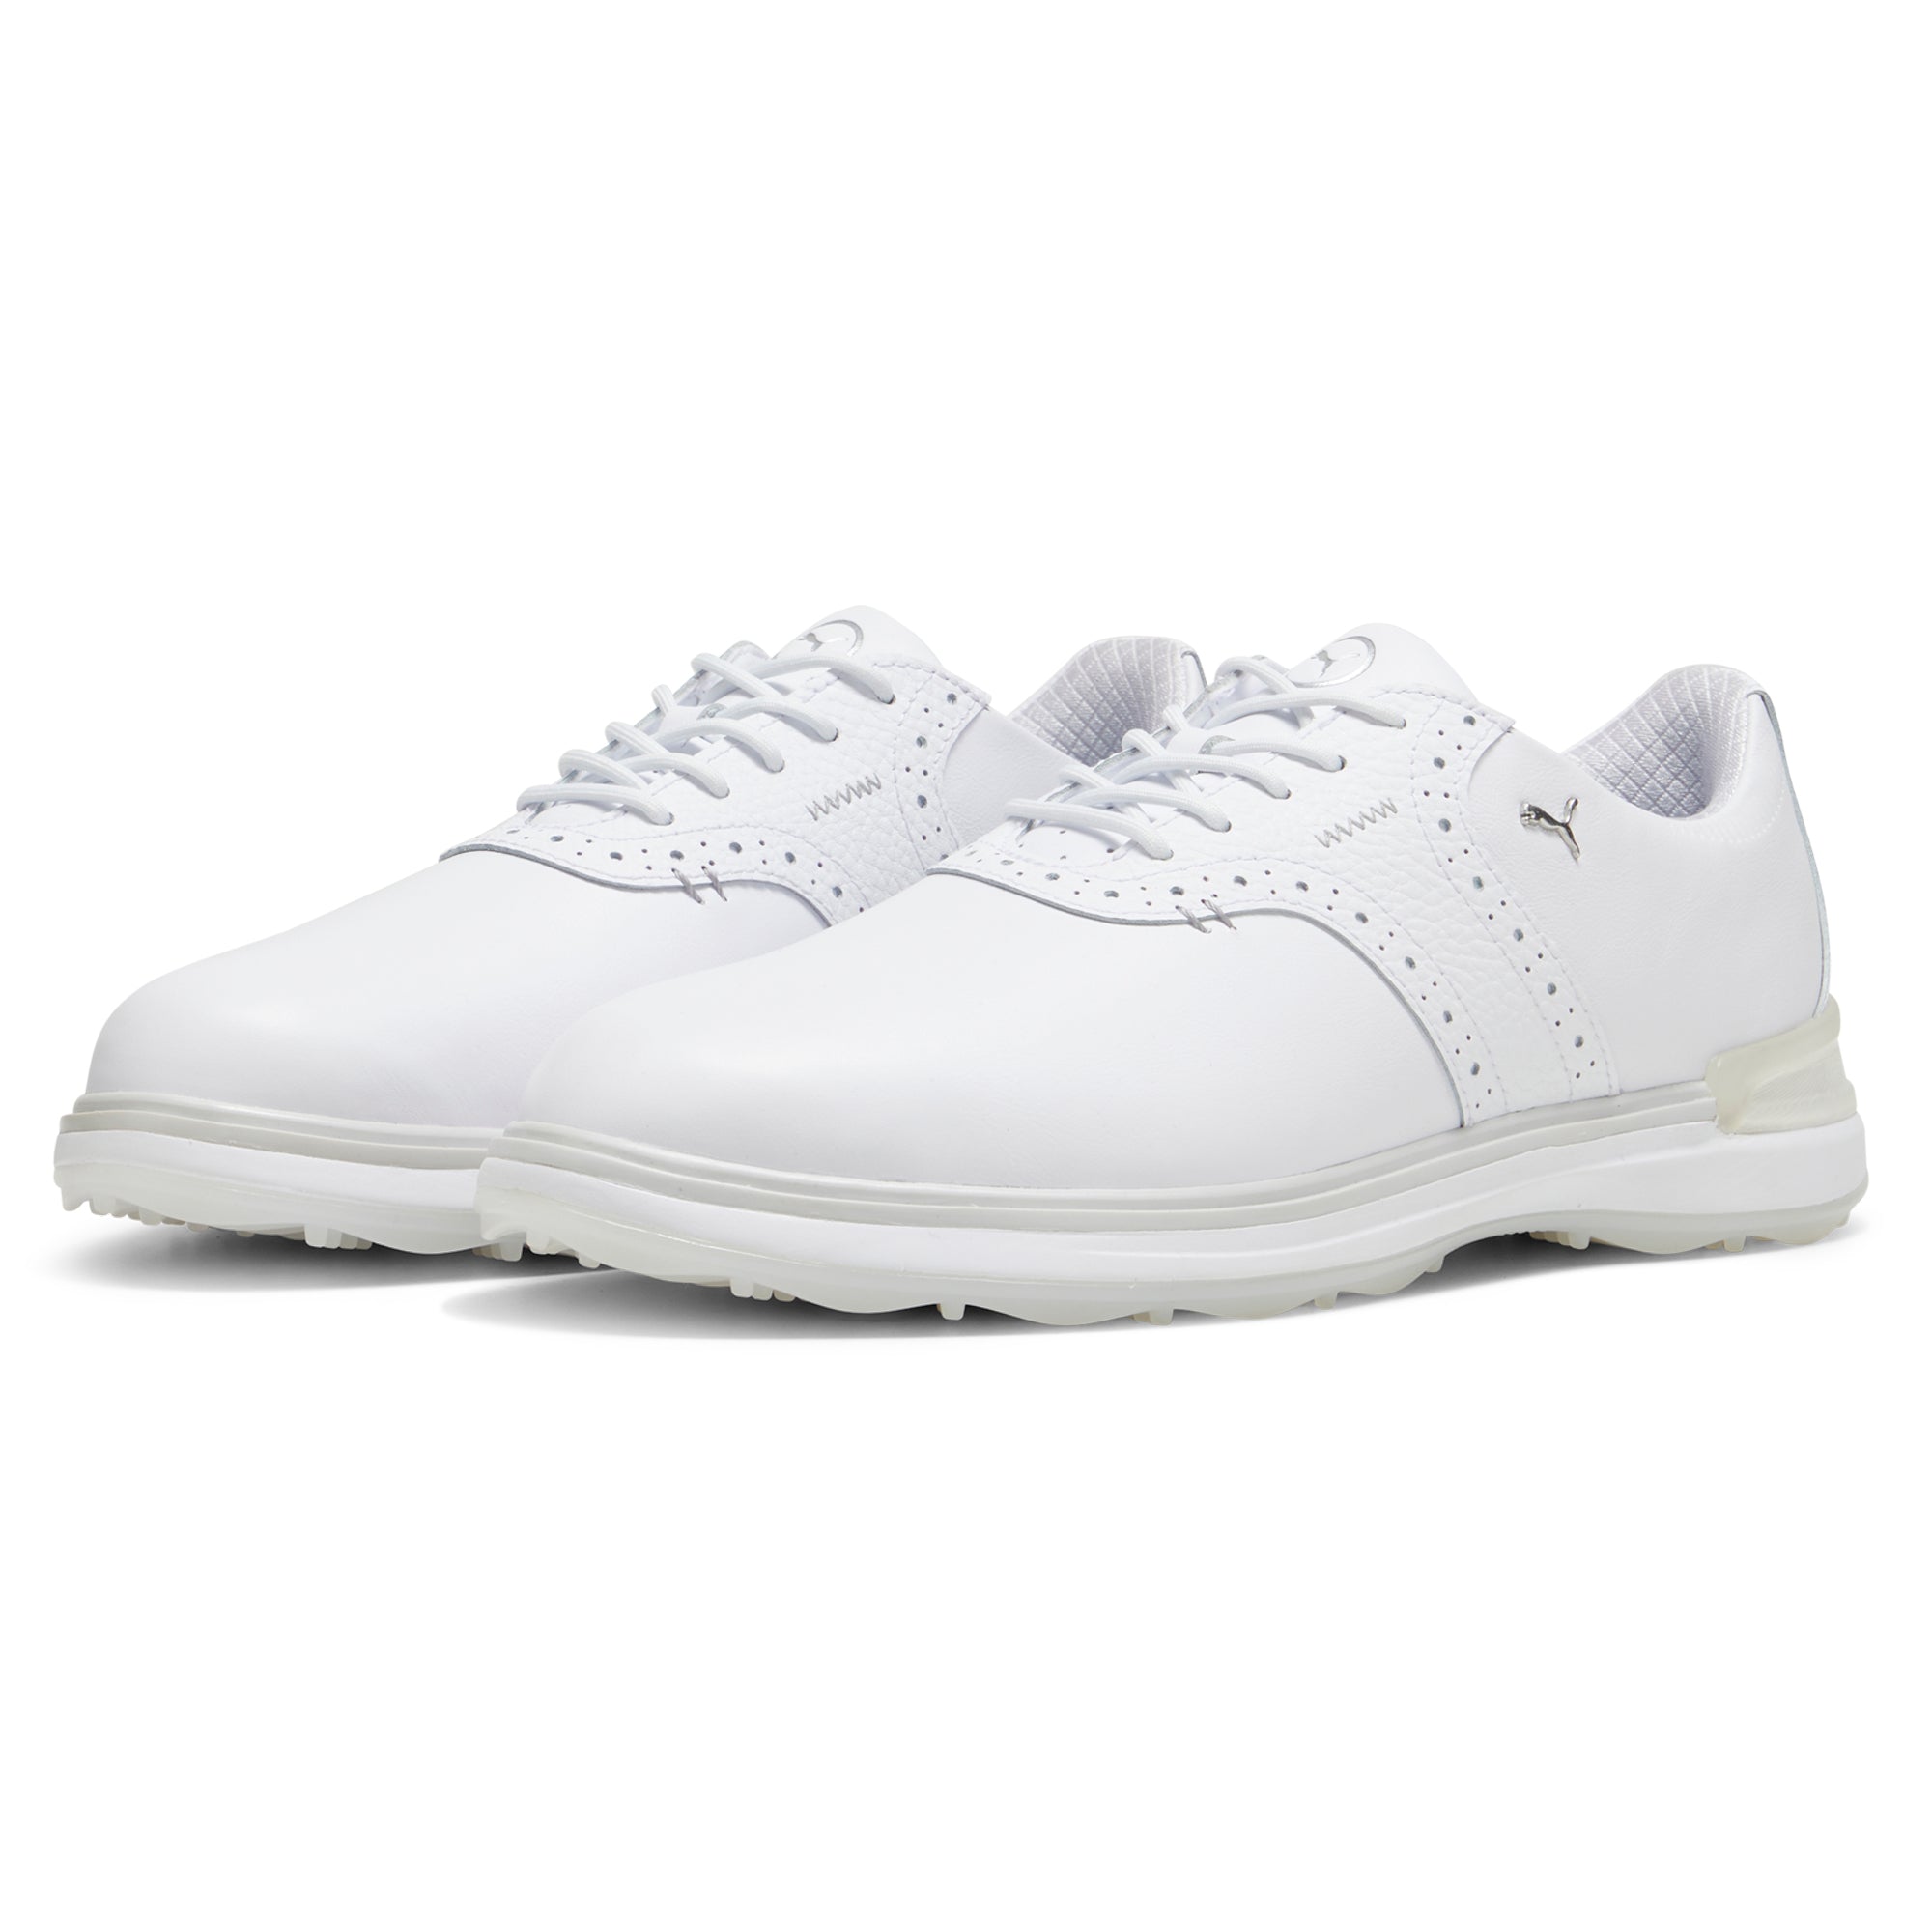 puma-avant-golf-shoes-379428-puma-white-ash-grey-04